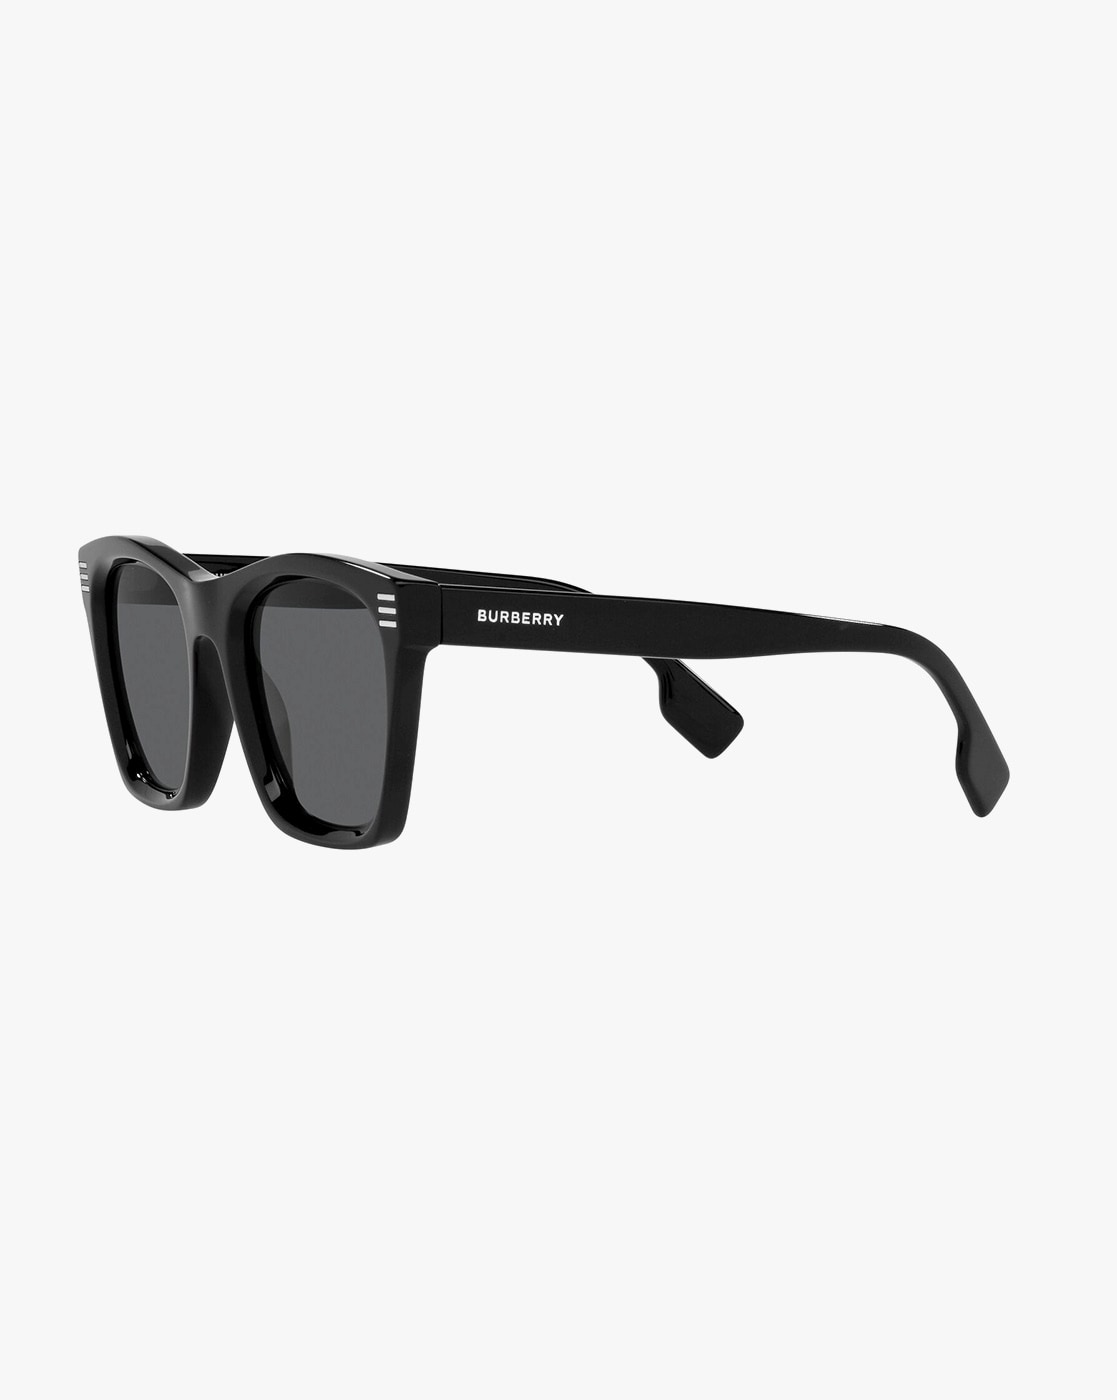 Buy Burberry Sunglasses Australia | 1001 Optometry | 1001 Optometry